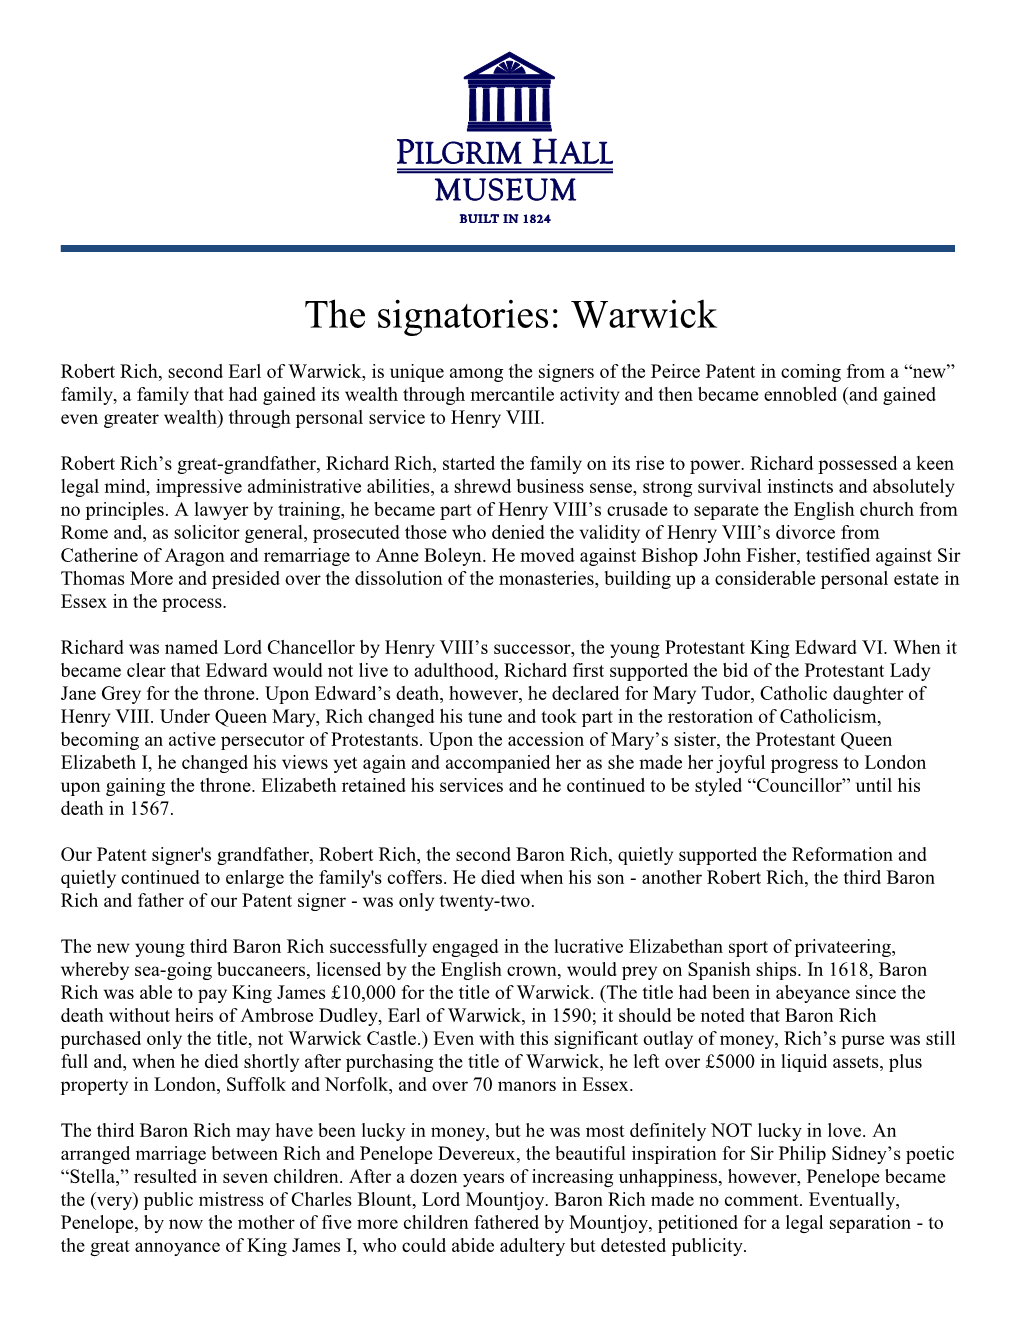 The Signatories: Warwick